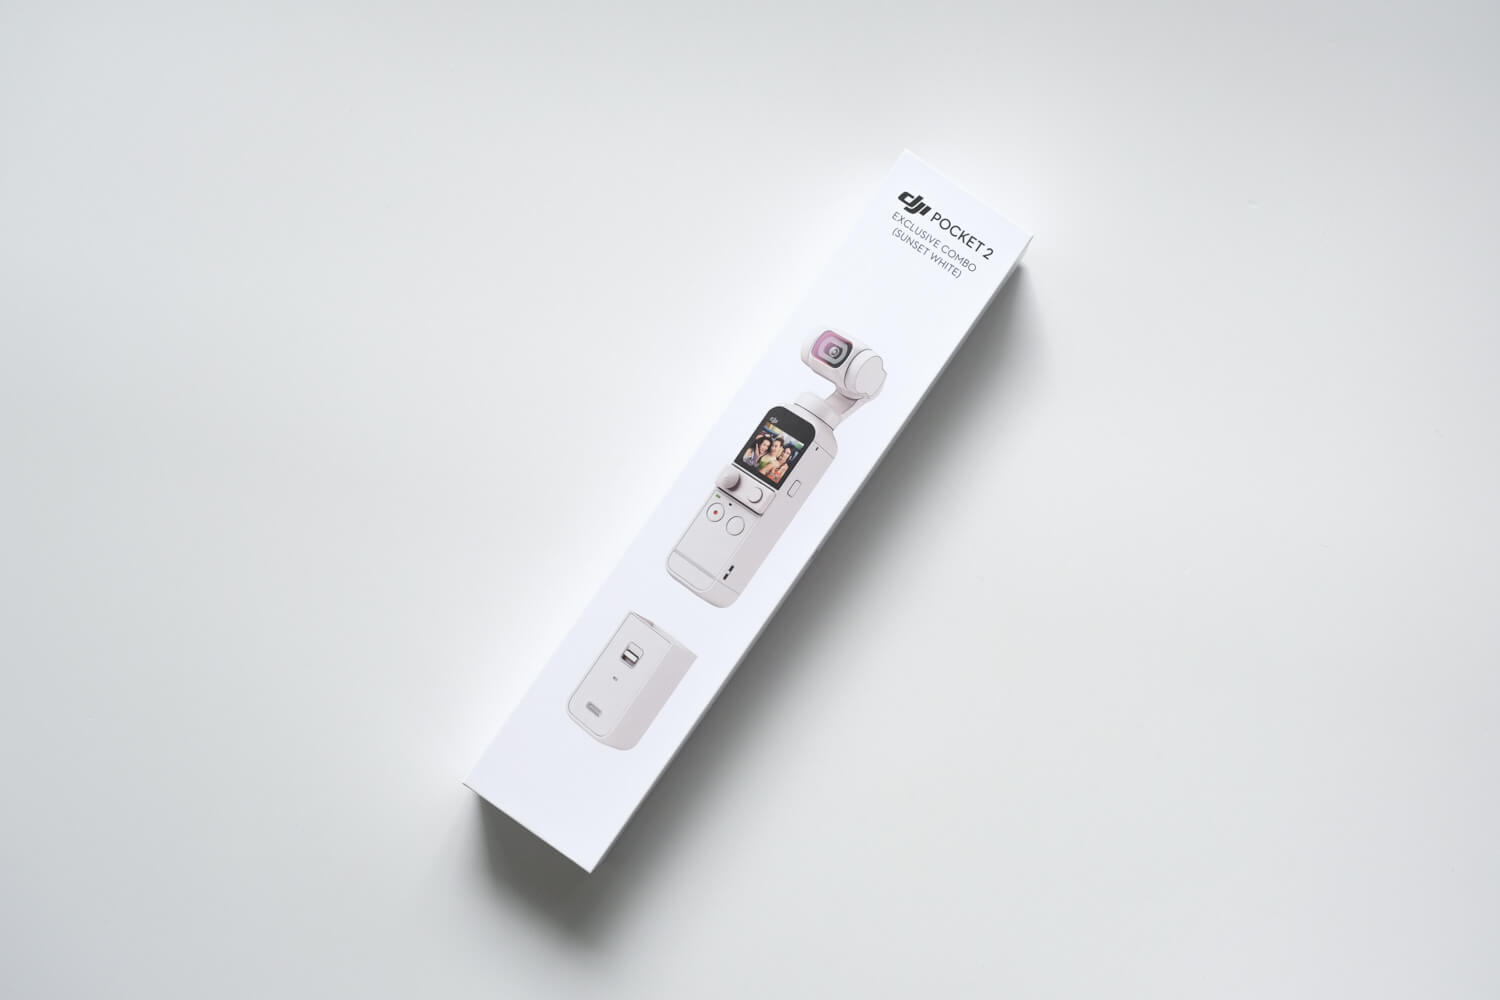 DJI Pocket 2 サンセットホワイト限定コンボセットのボックス